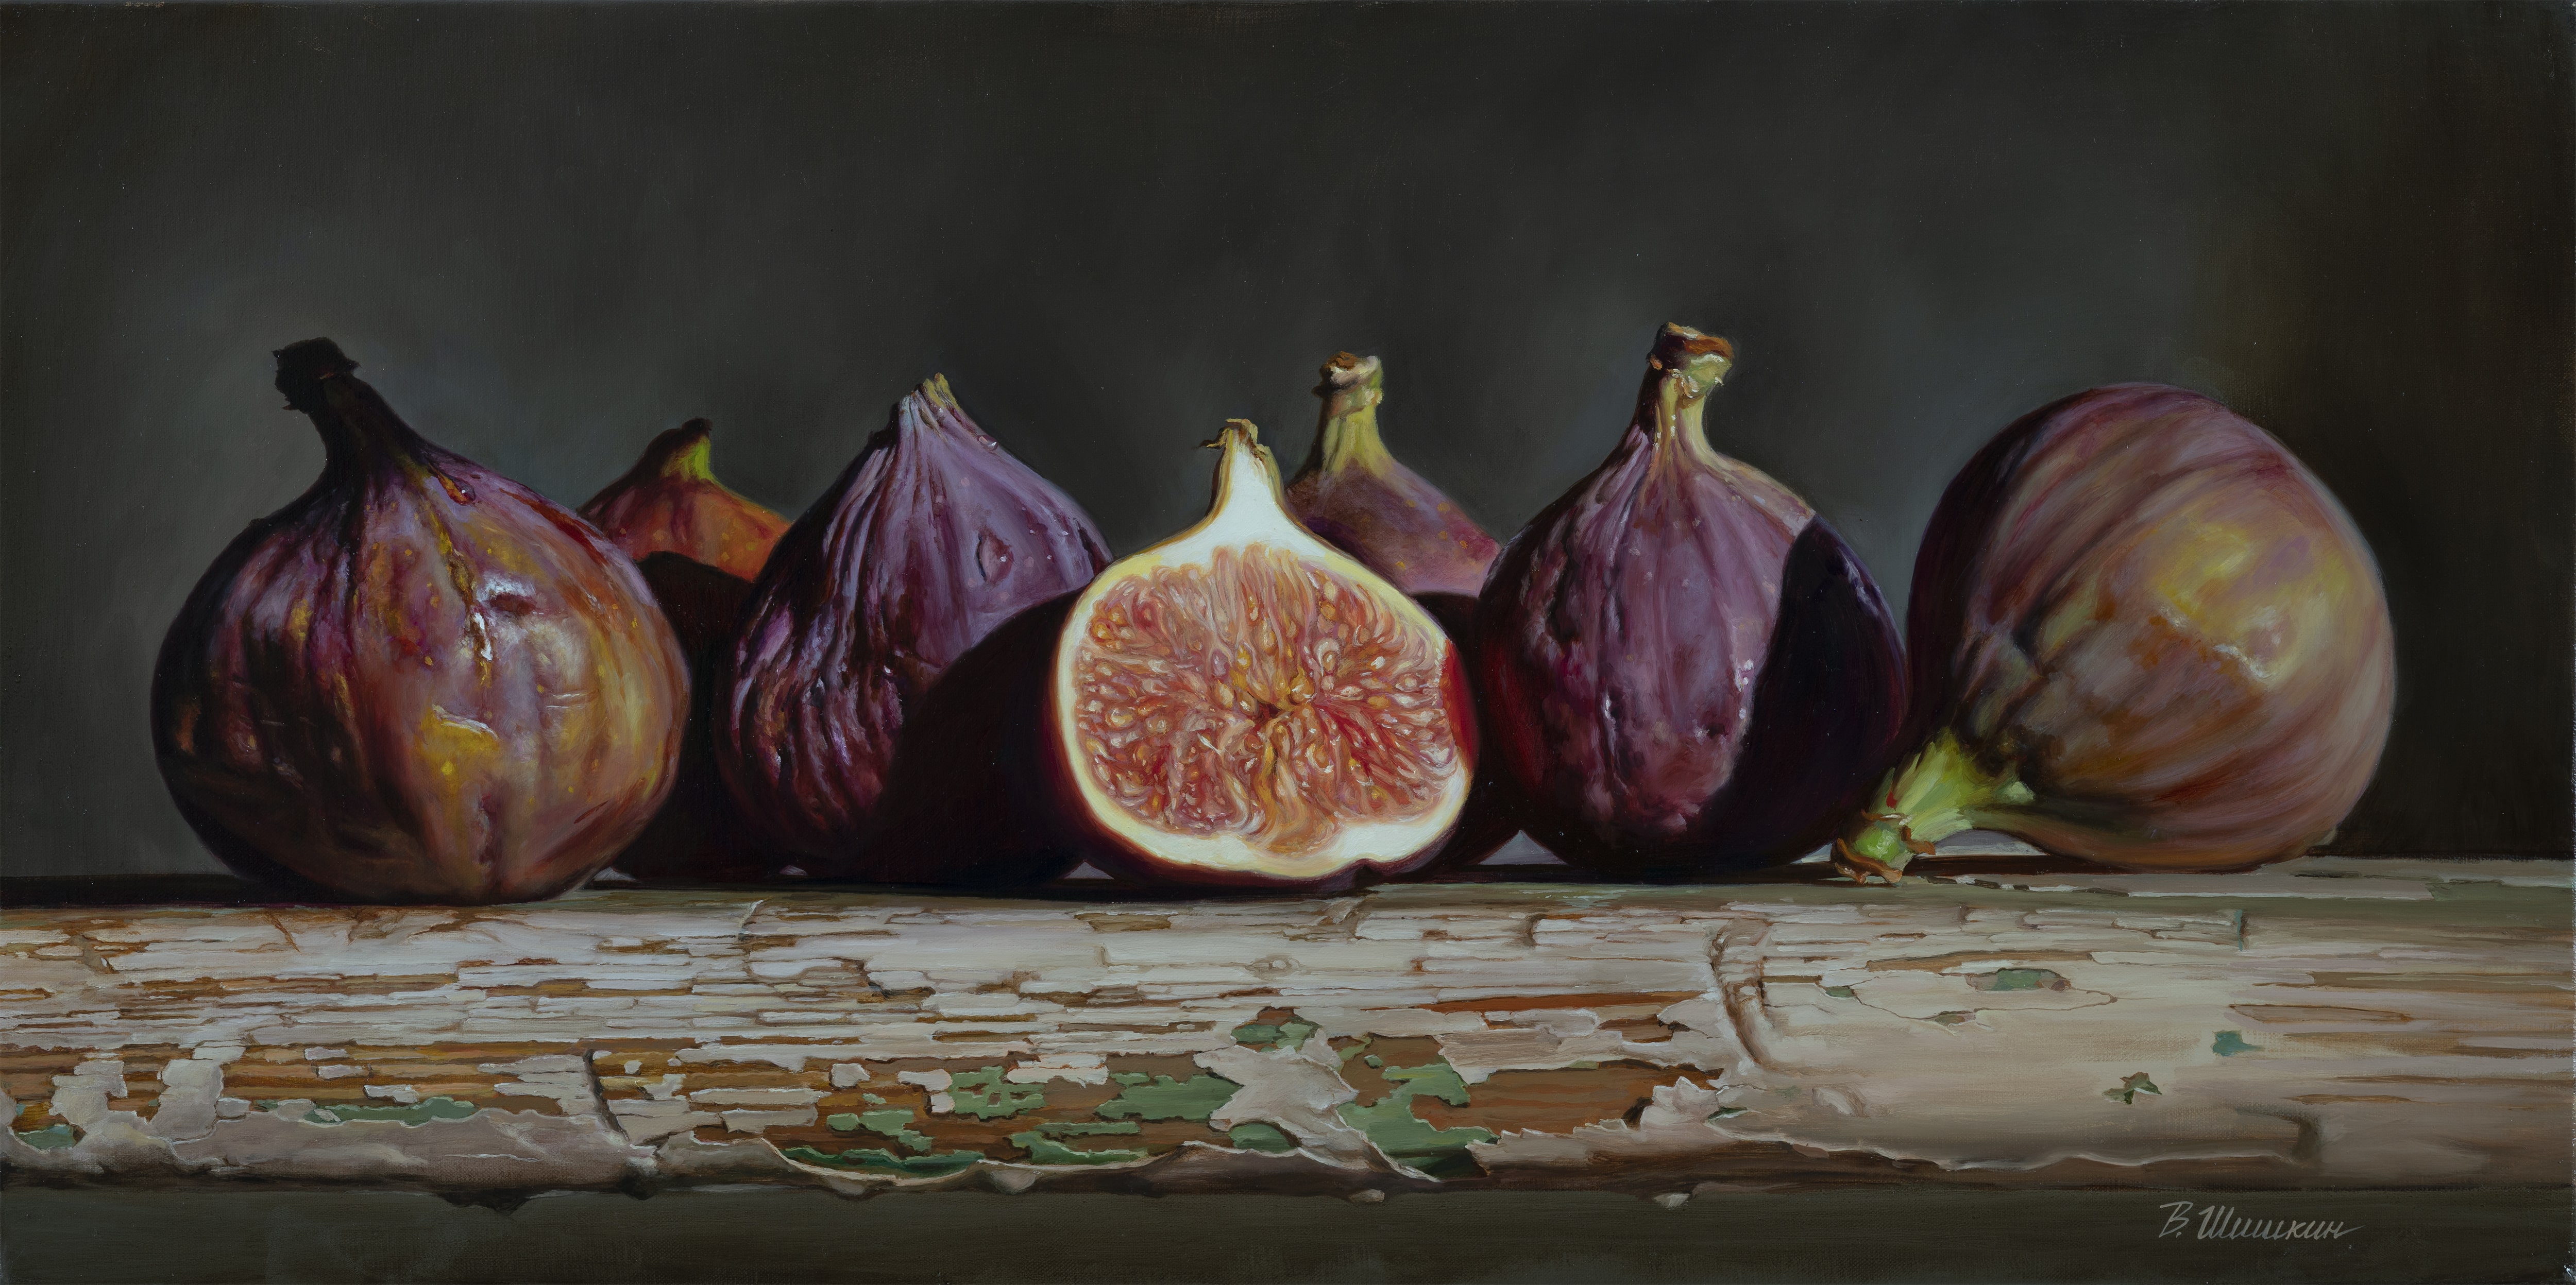 Figs - 1, Valery Shishkin, Buy the painting Oil